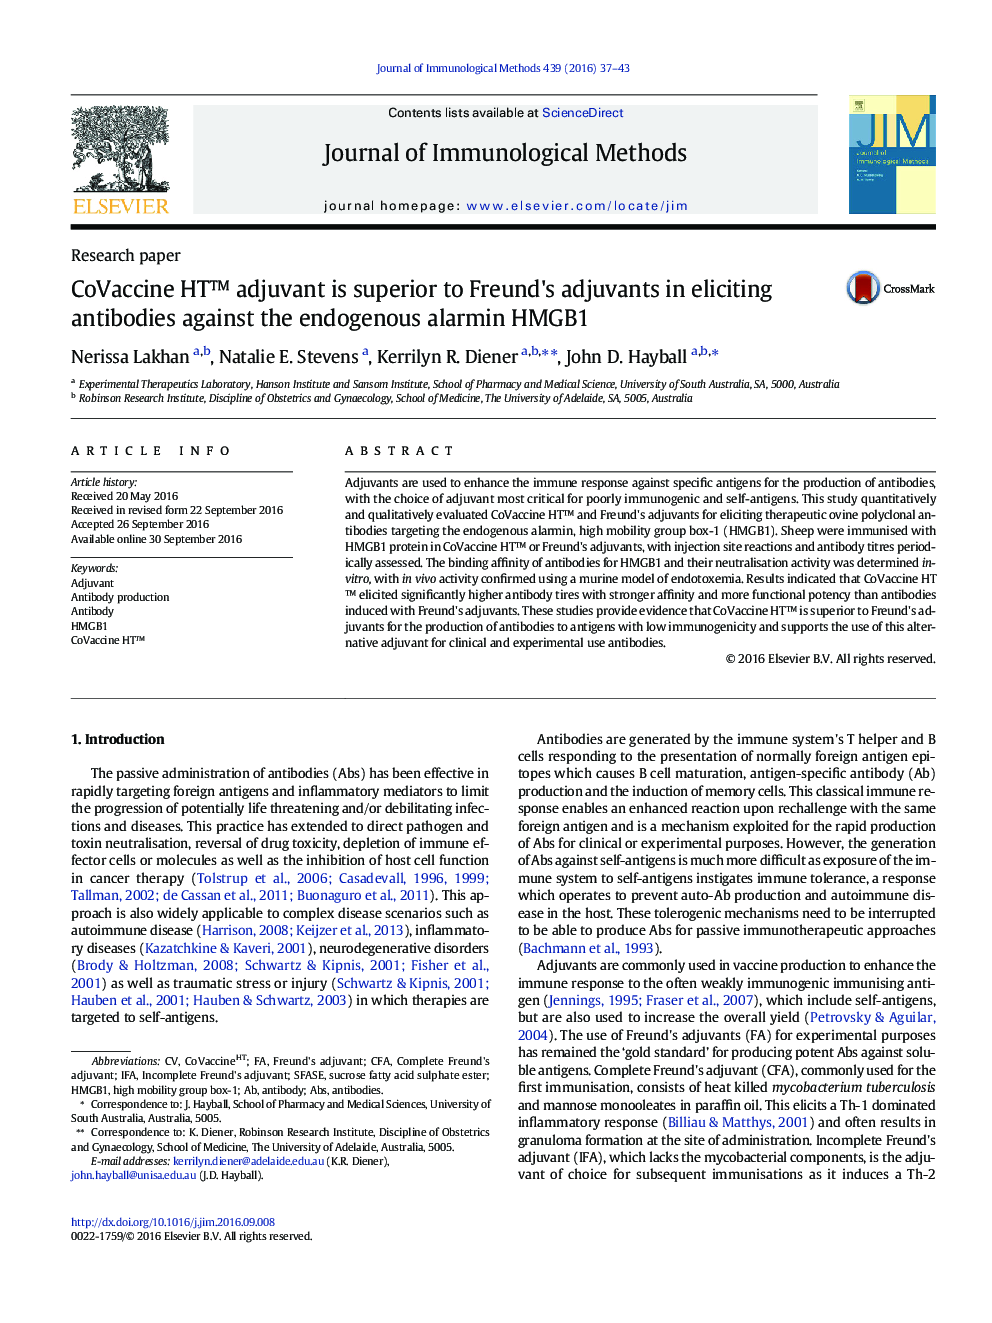 Research paperCoVaccine HTâ¢ adjuvant is superior to Freund's adjuvants in eliciting antibodies against the endogenous alarmin HMGB1